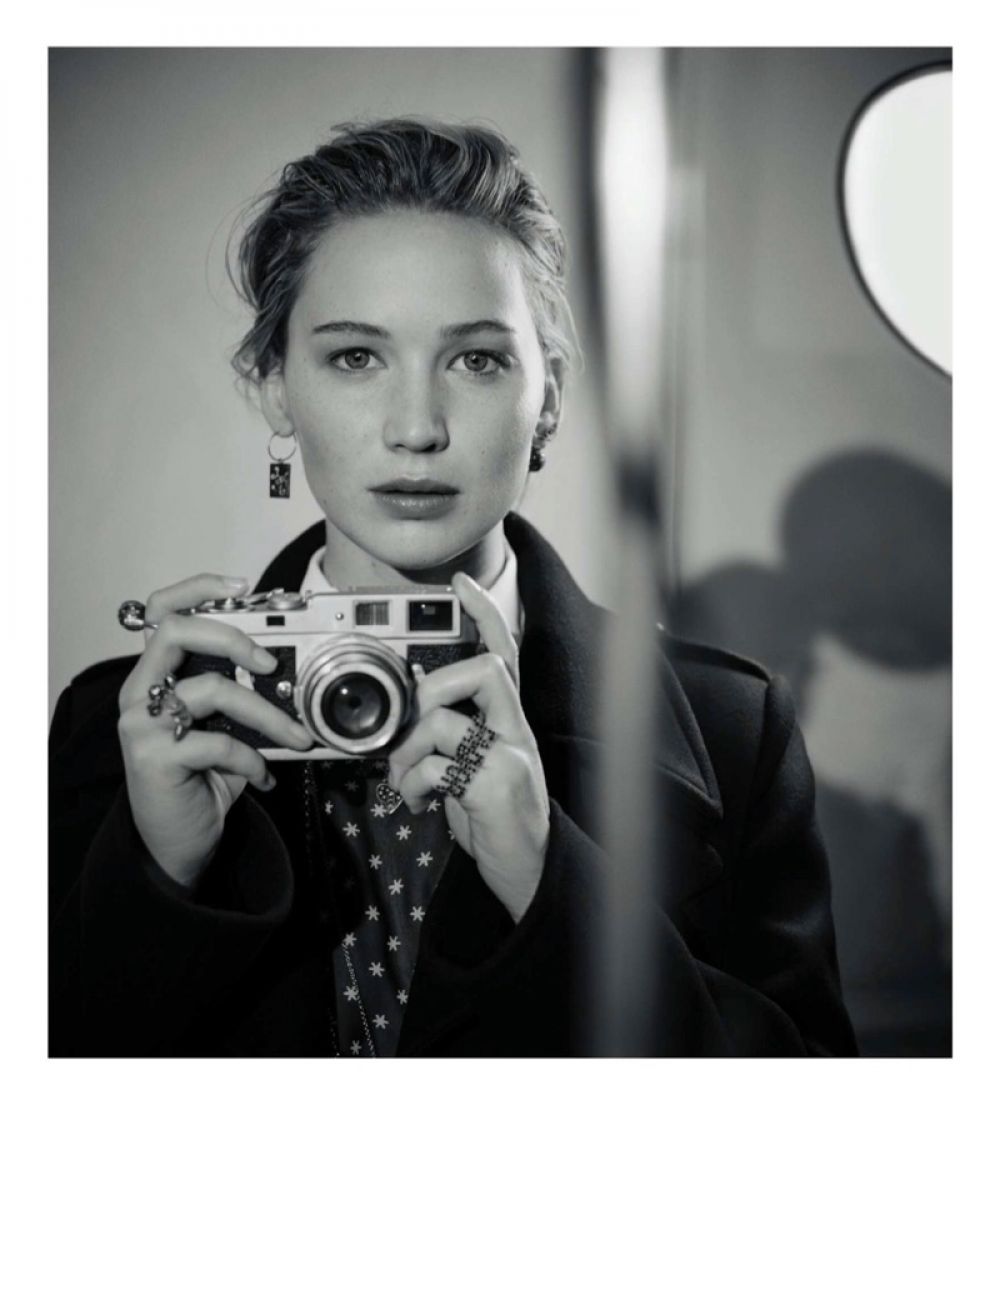 Jennifer Lawrence for Dior, Pre-fall 2018 Campaign